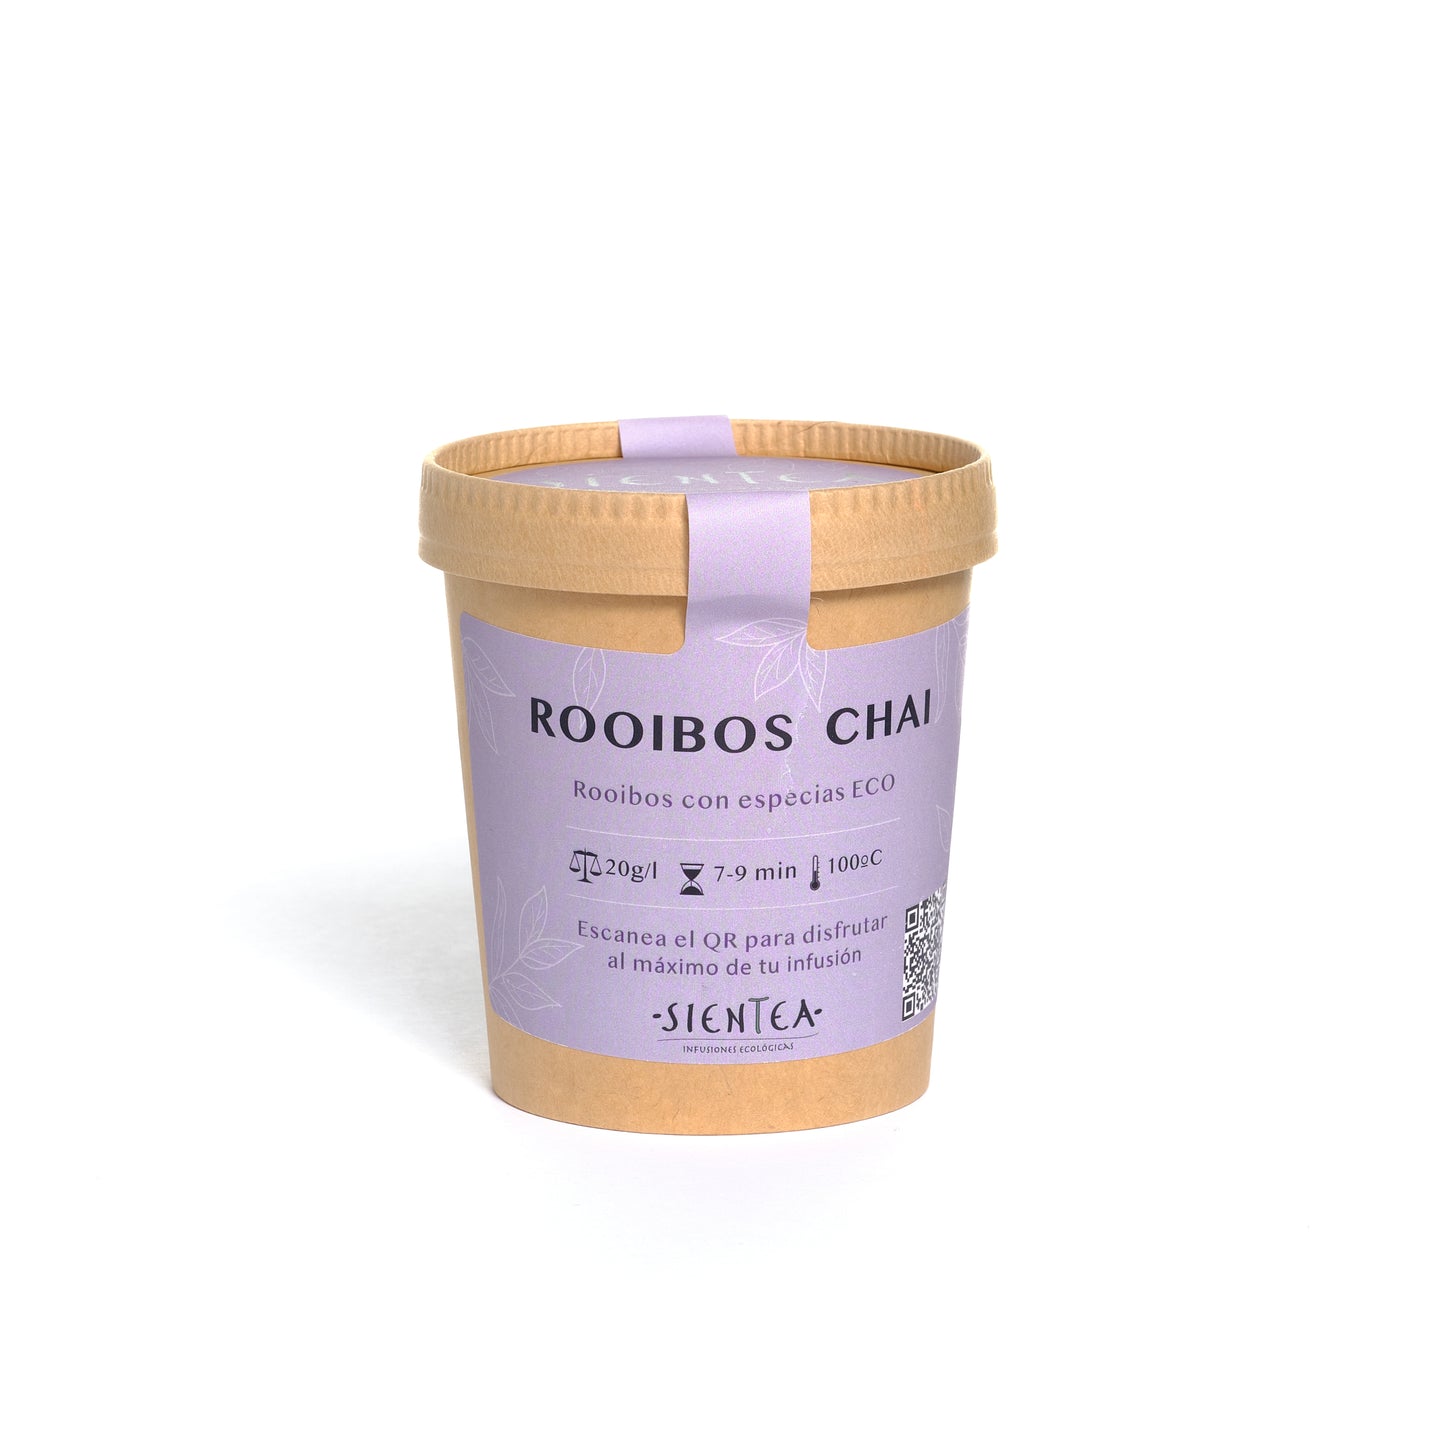 ROOIBOS CHAI - Rooibos con especias ECO - 100g